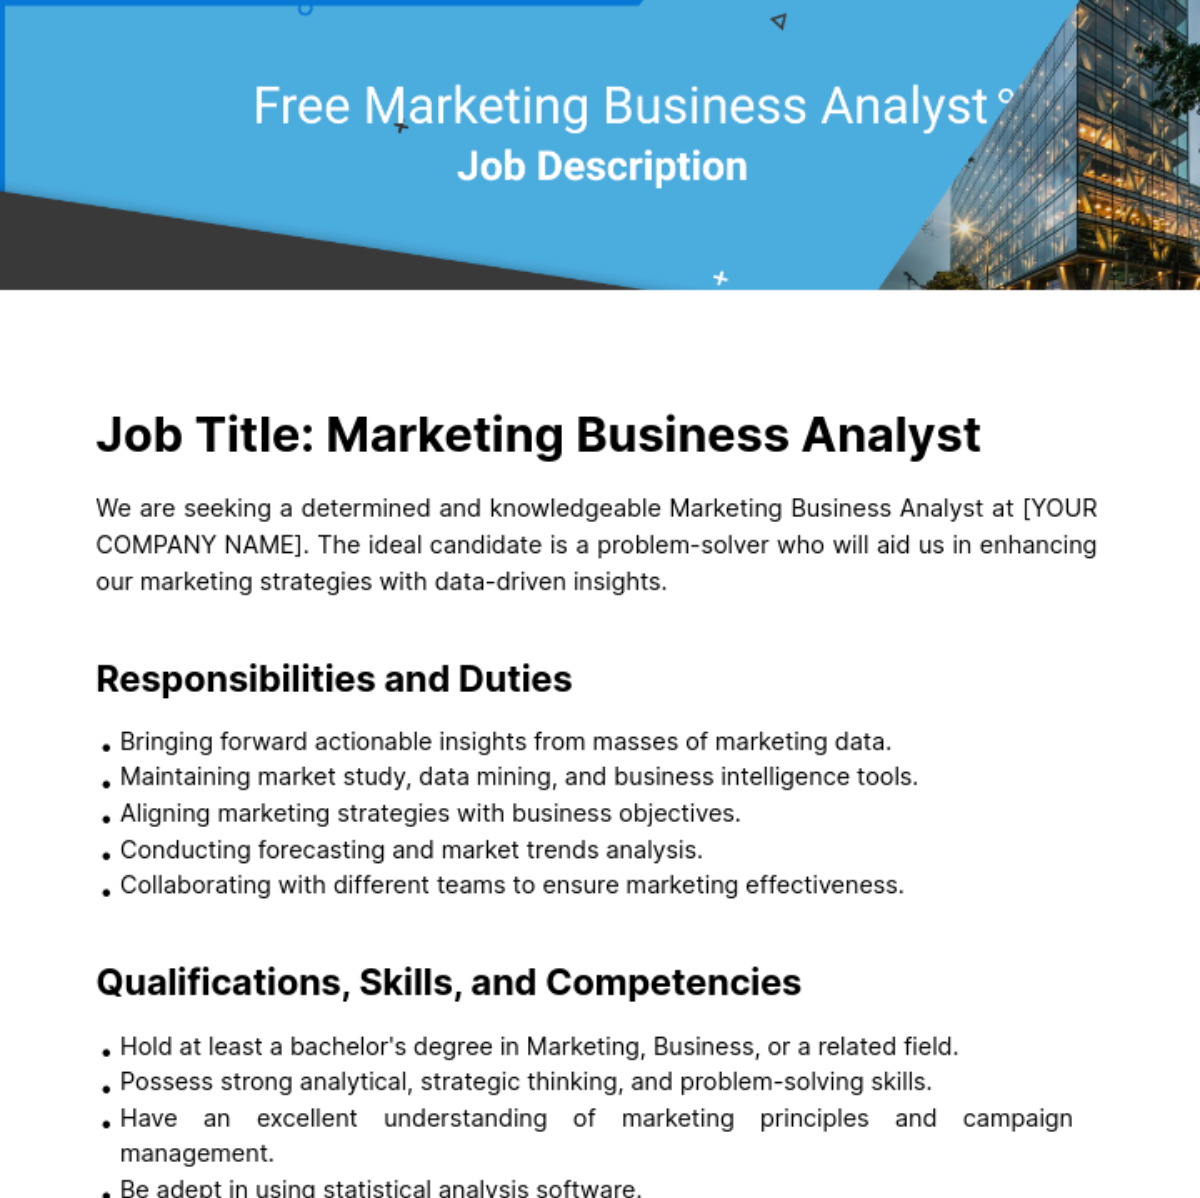 Free Marketing Business Analyst Job Description Template